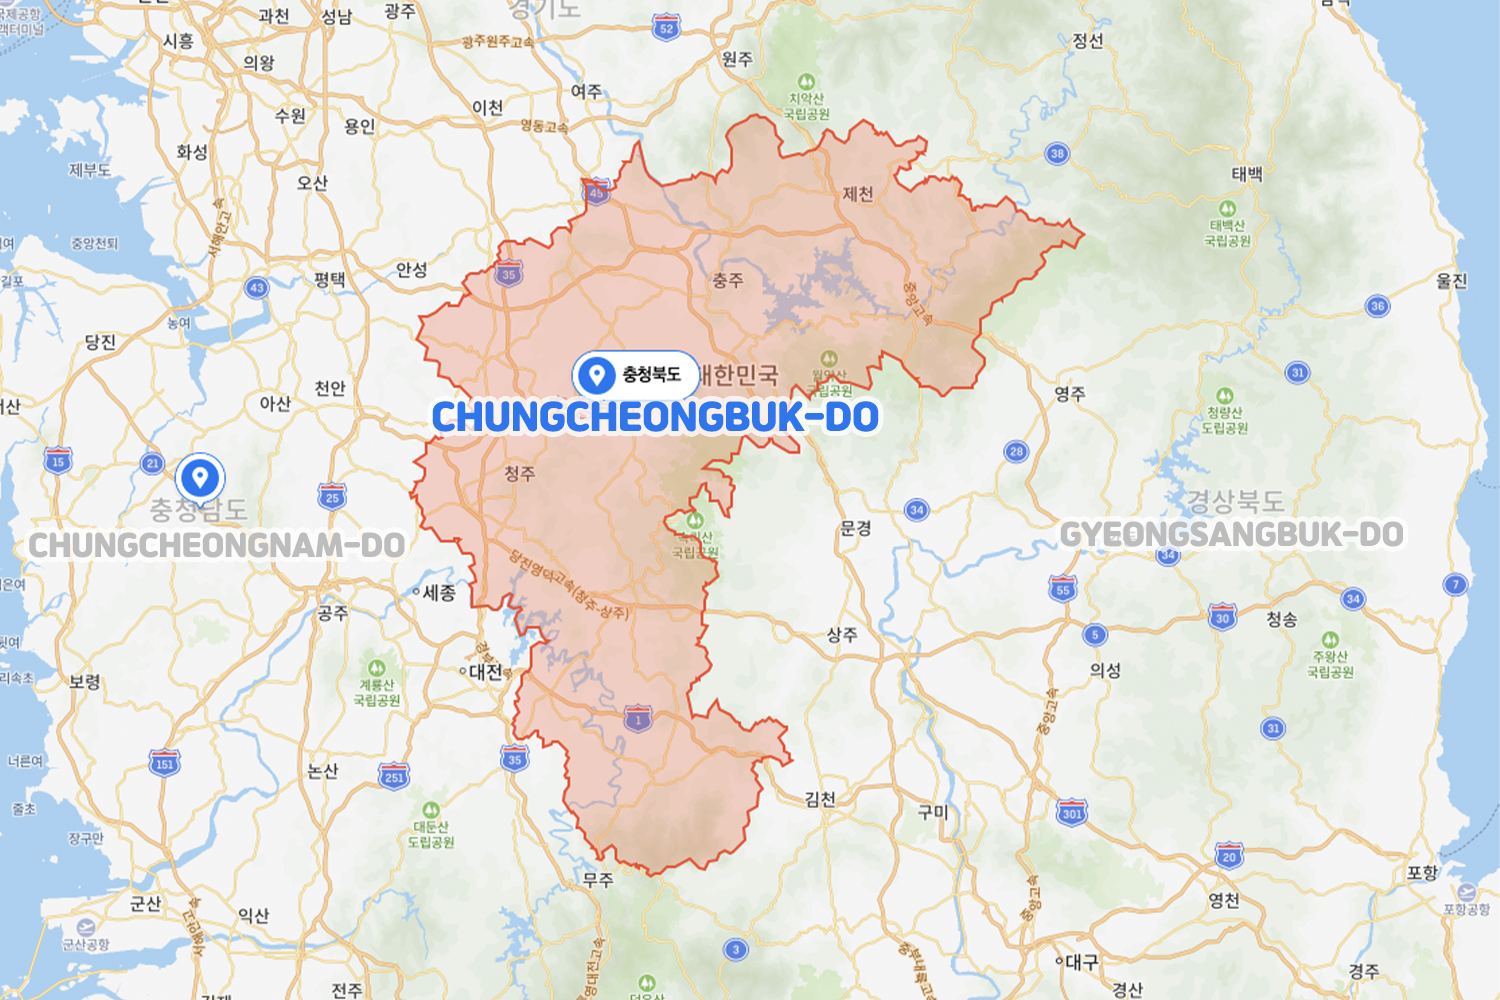 chungcheongbuk-do map in korea